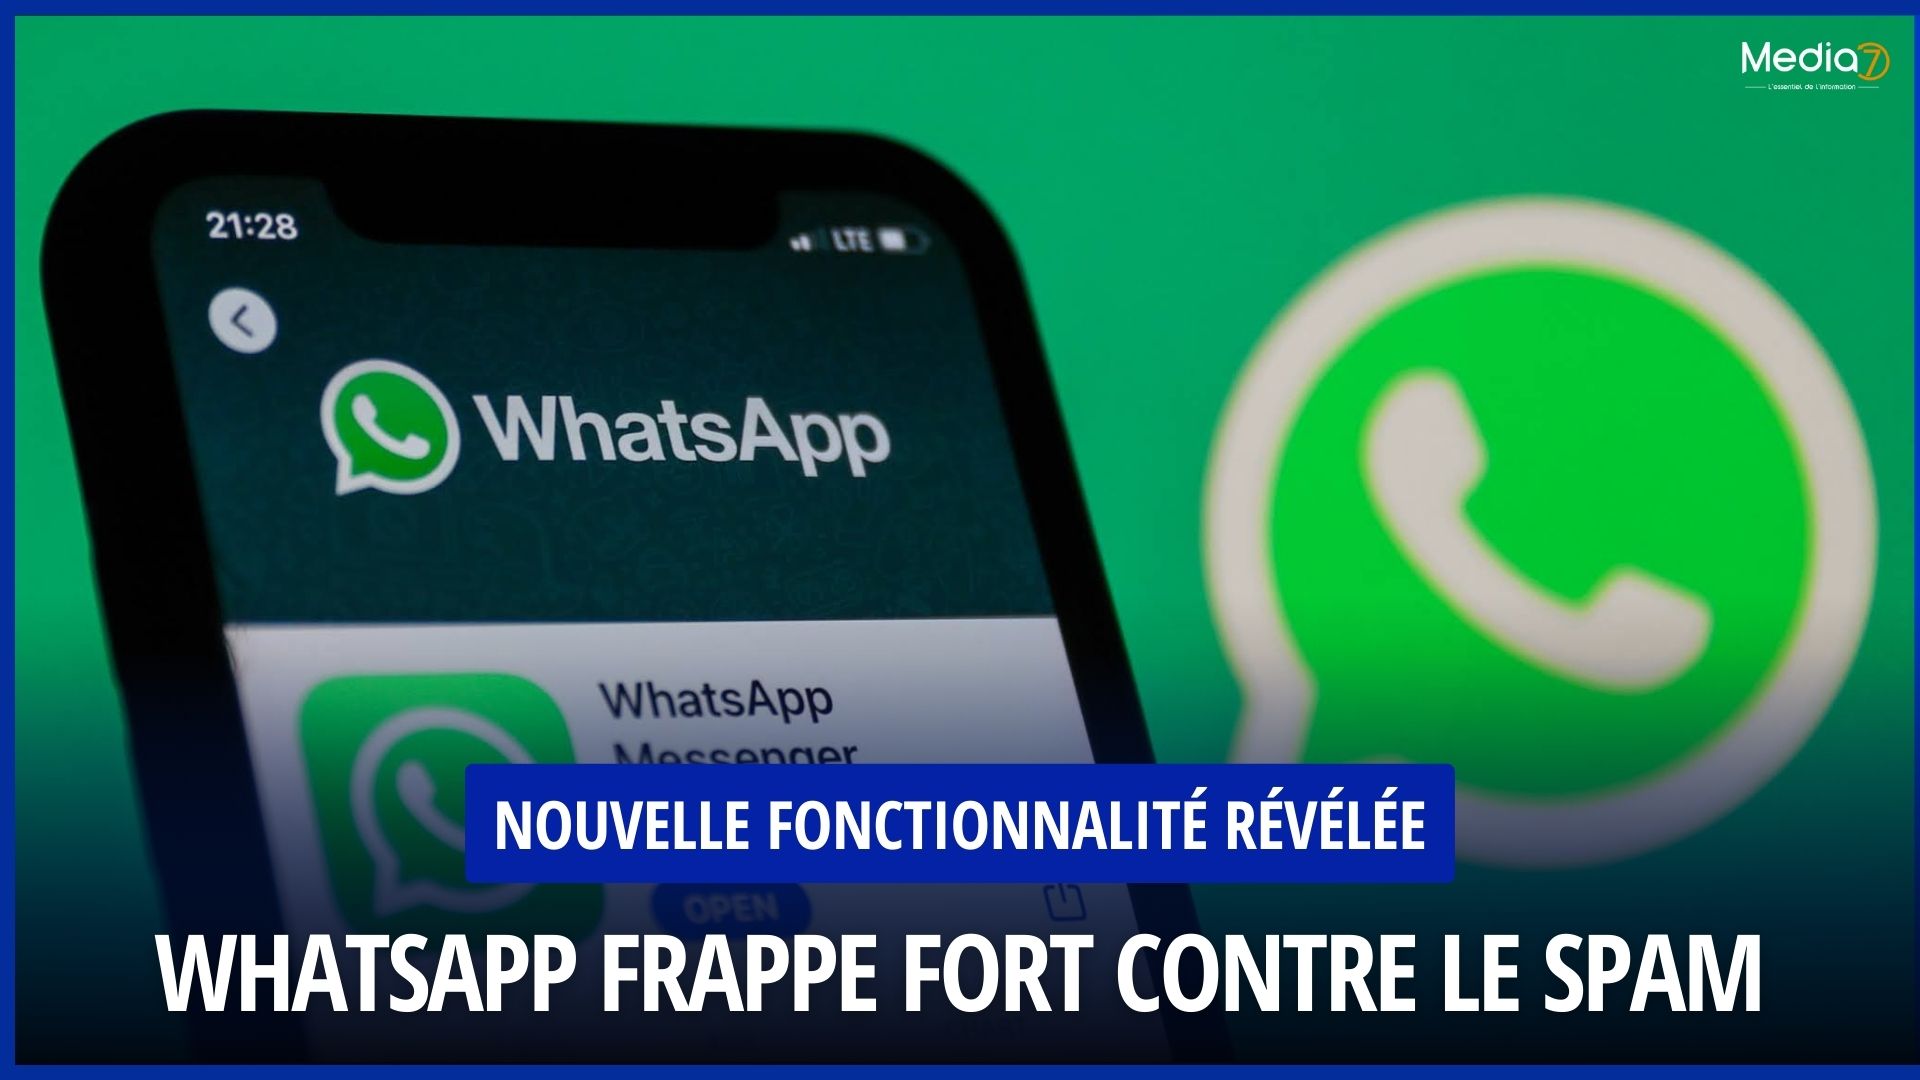 WhatsApp Frappe Fort Contre le Spam